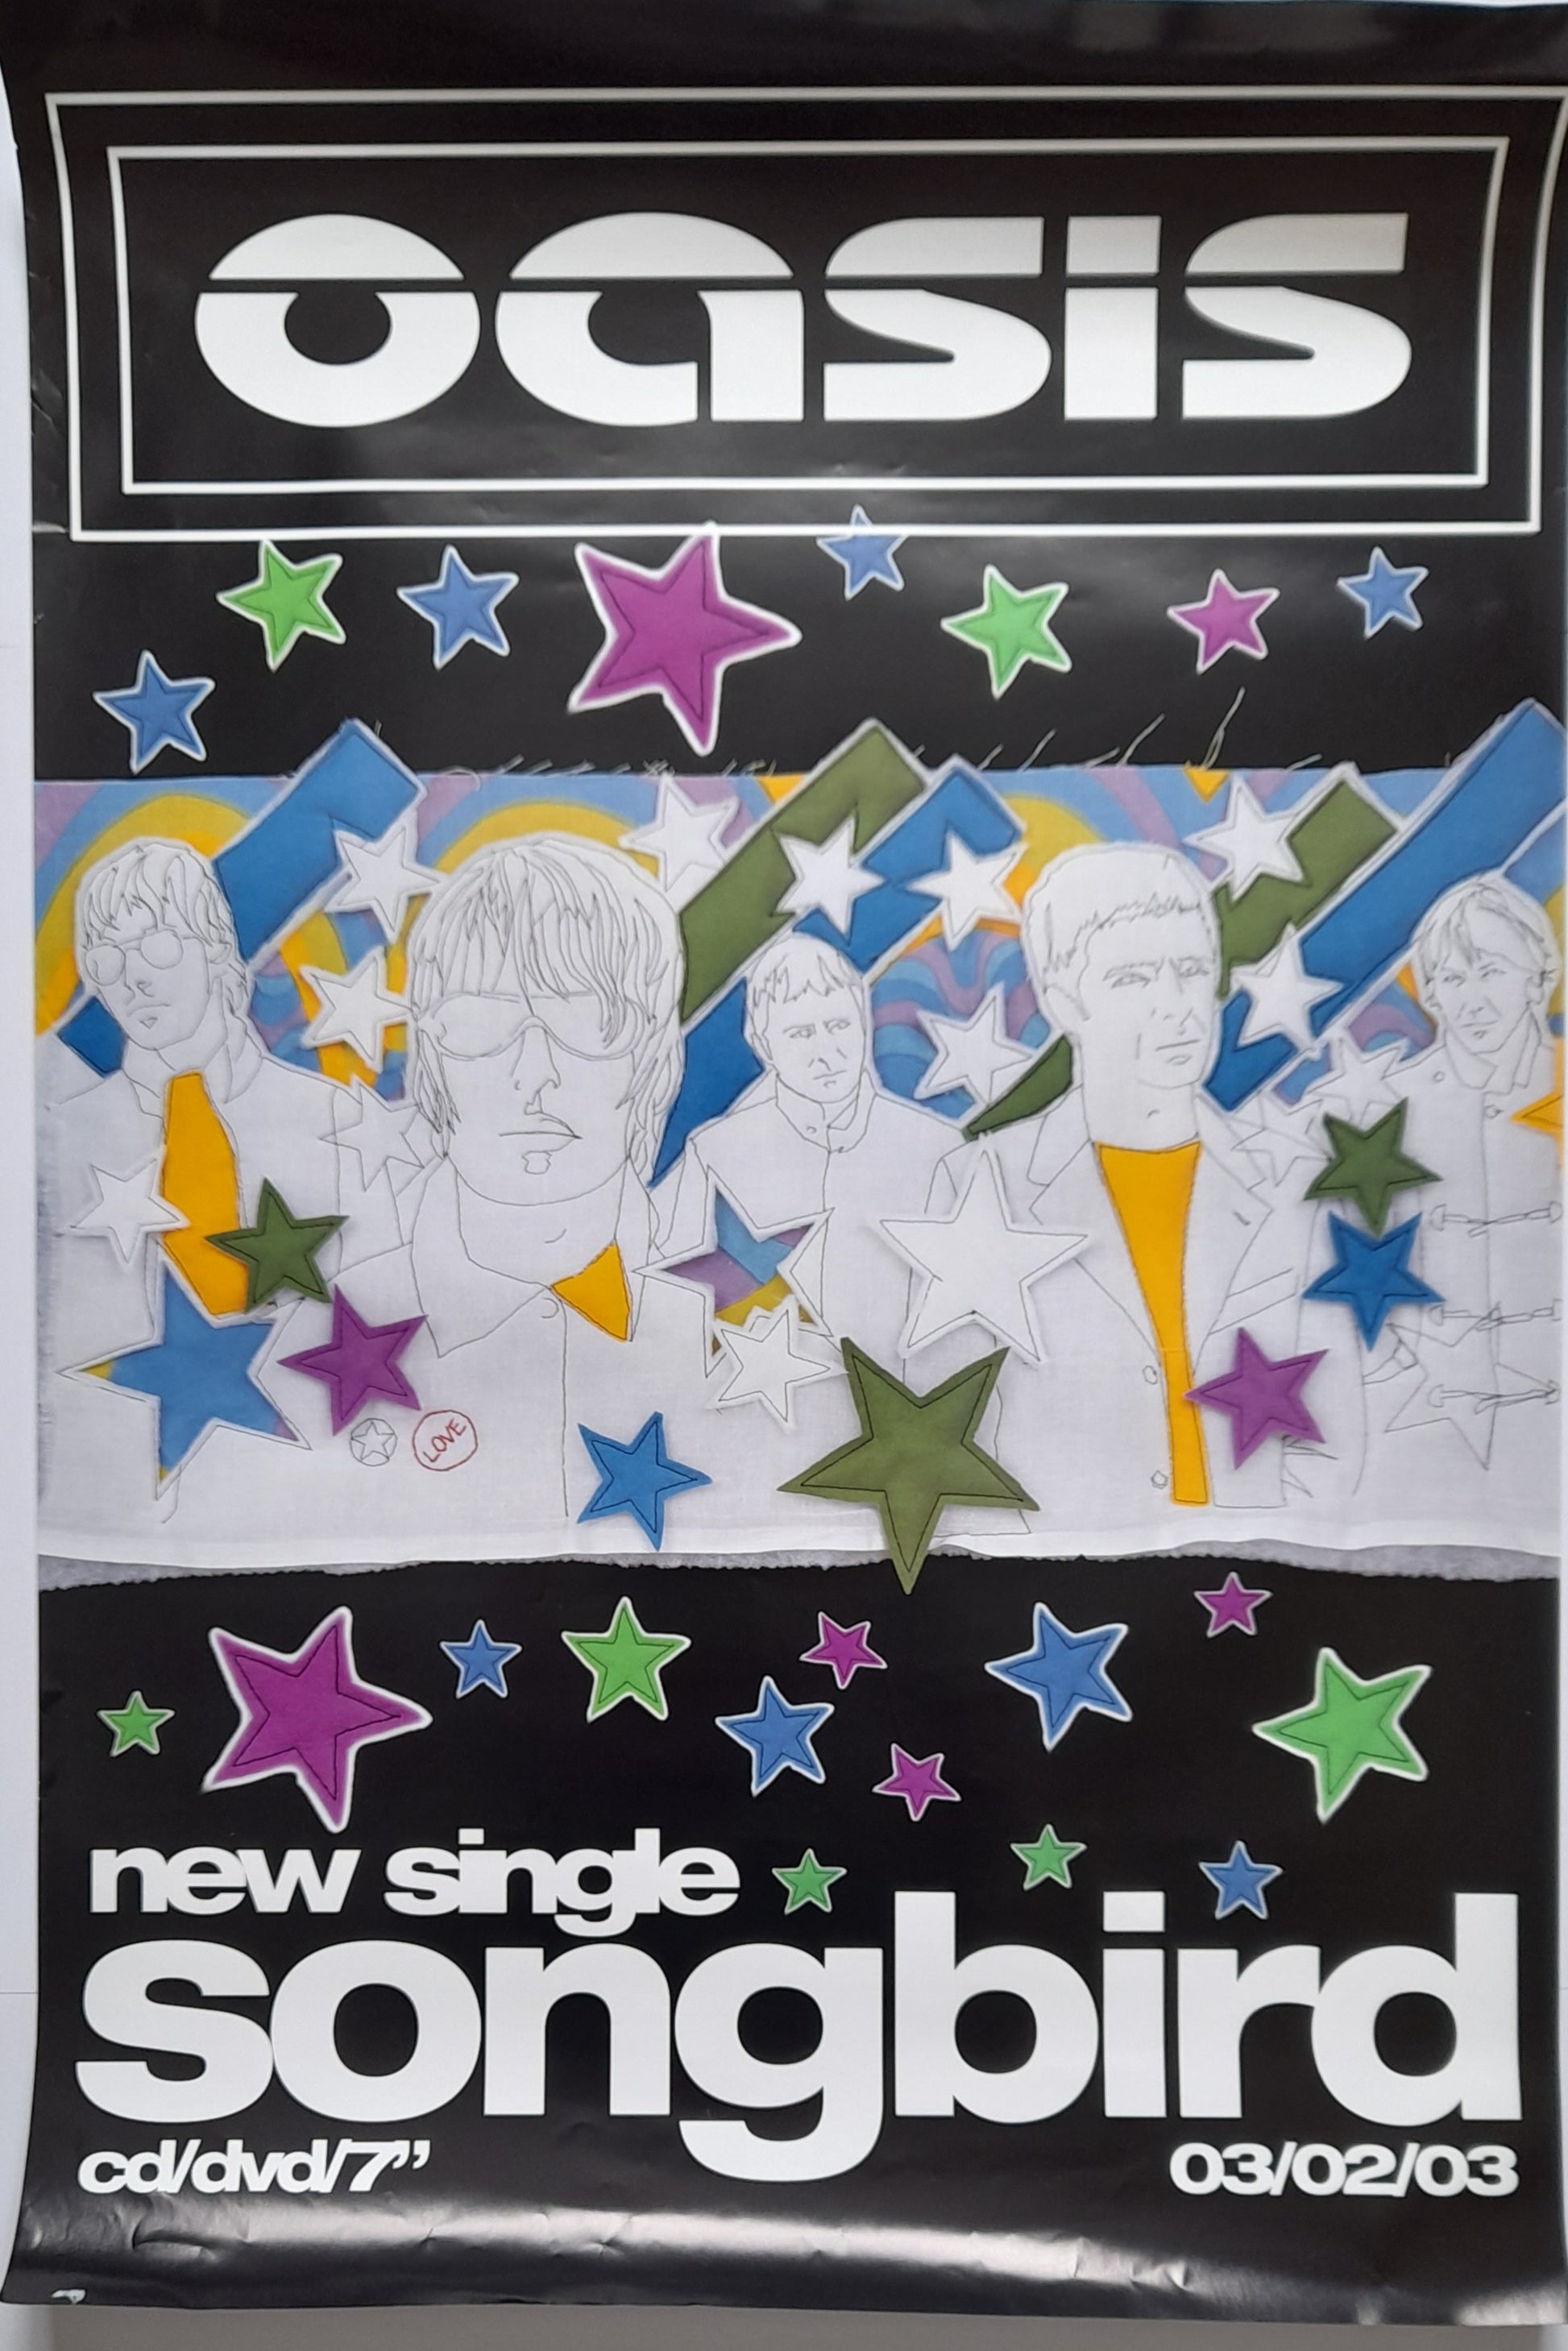 Oasis Songbird single Promotional Poster - RewindPressPlay